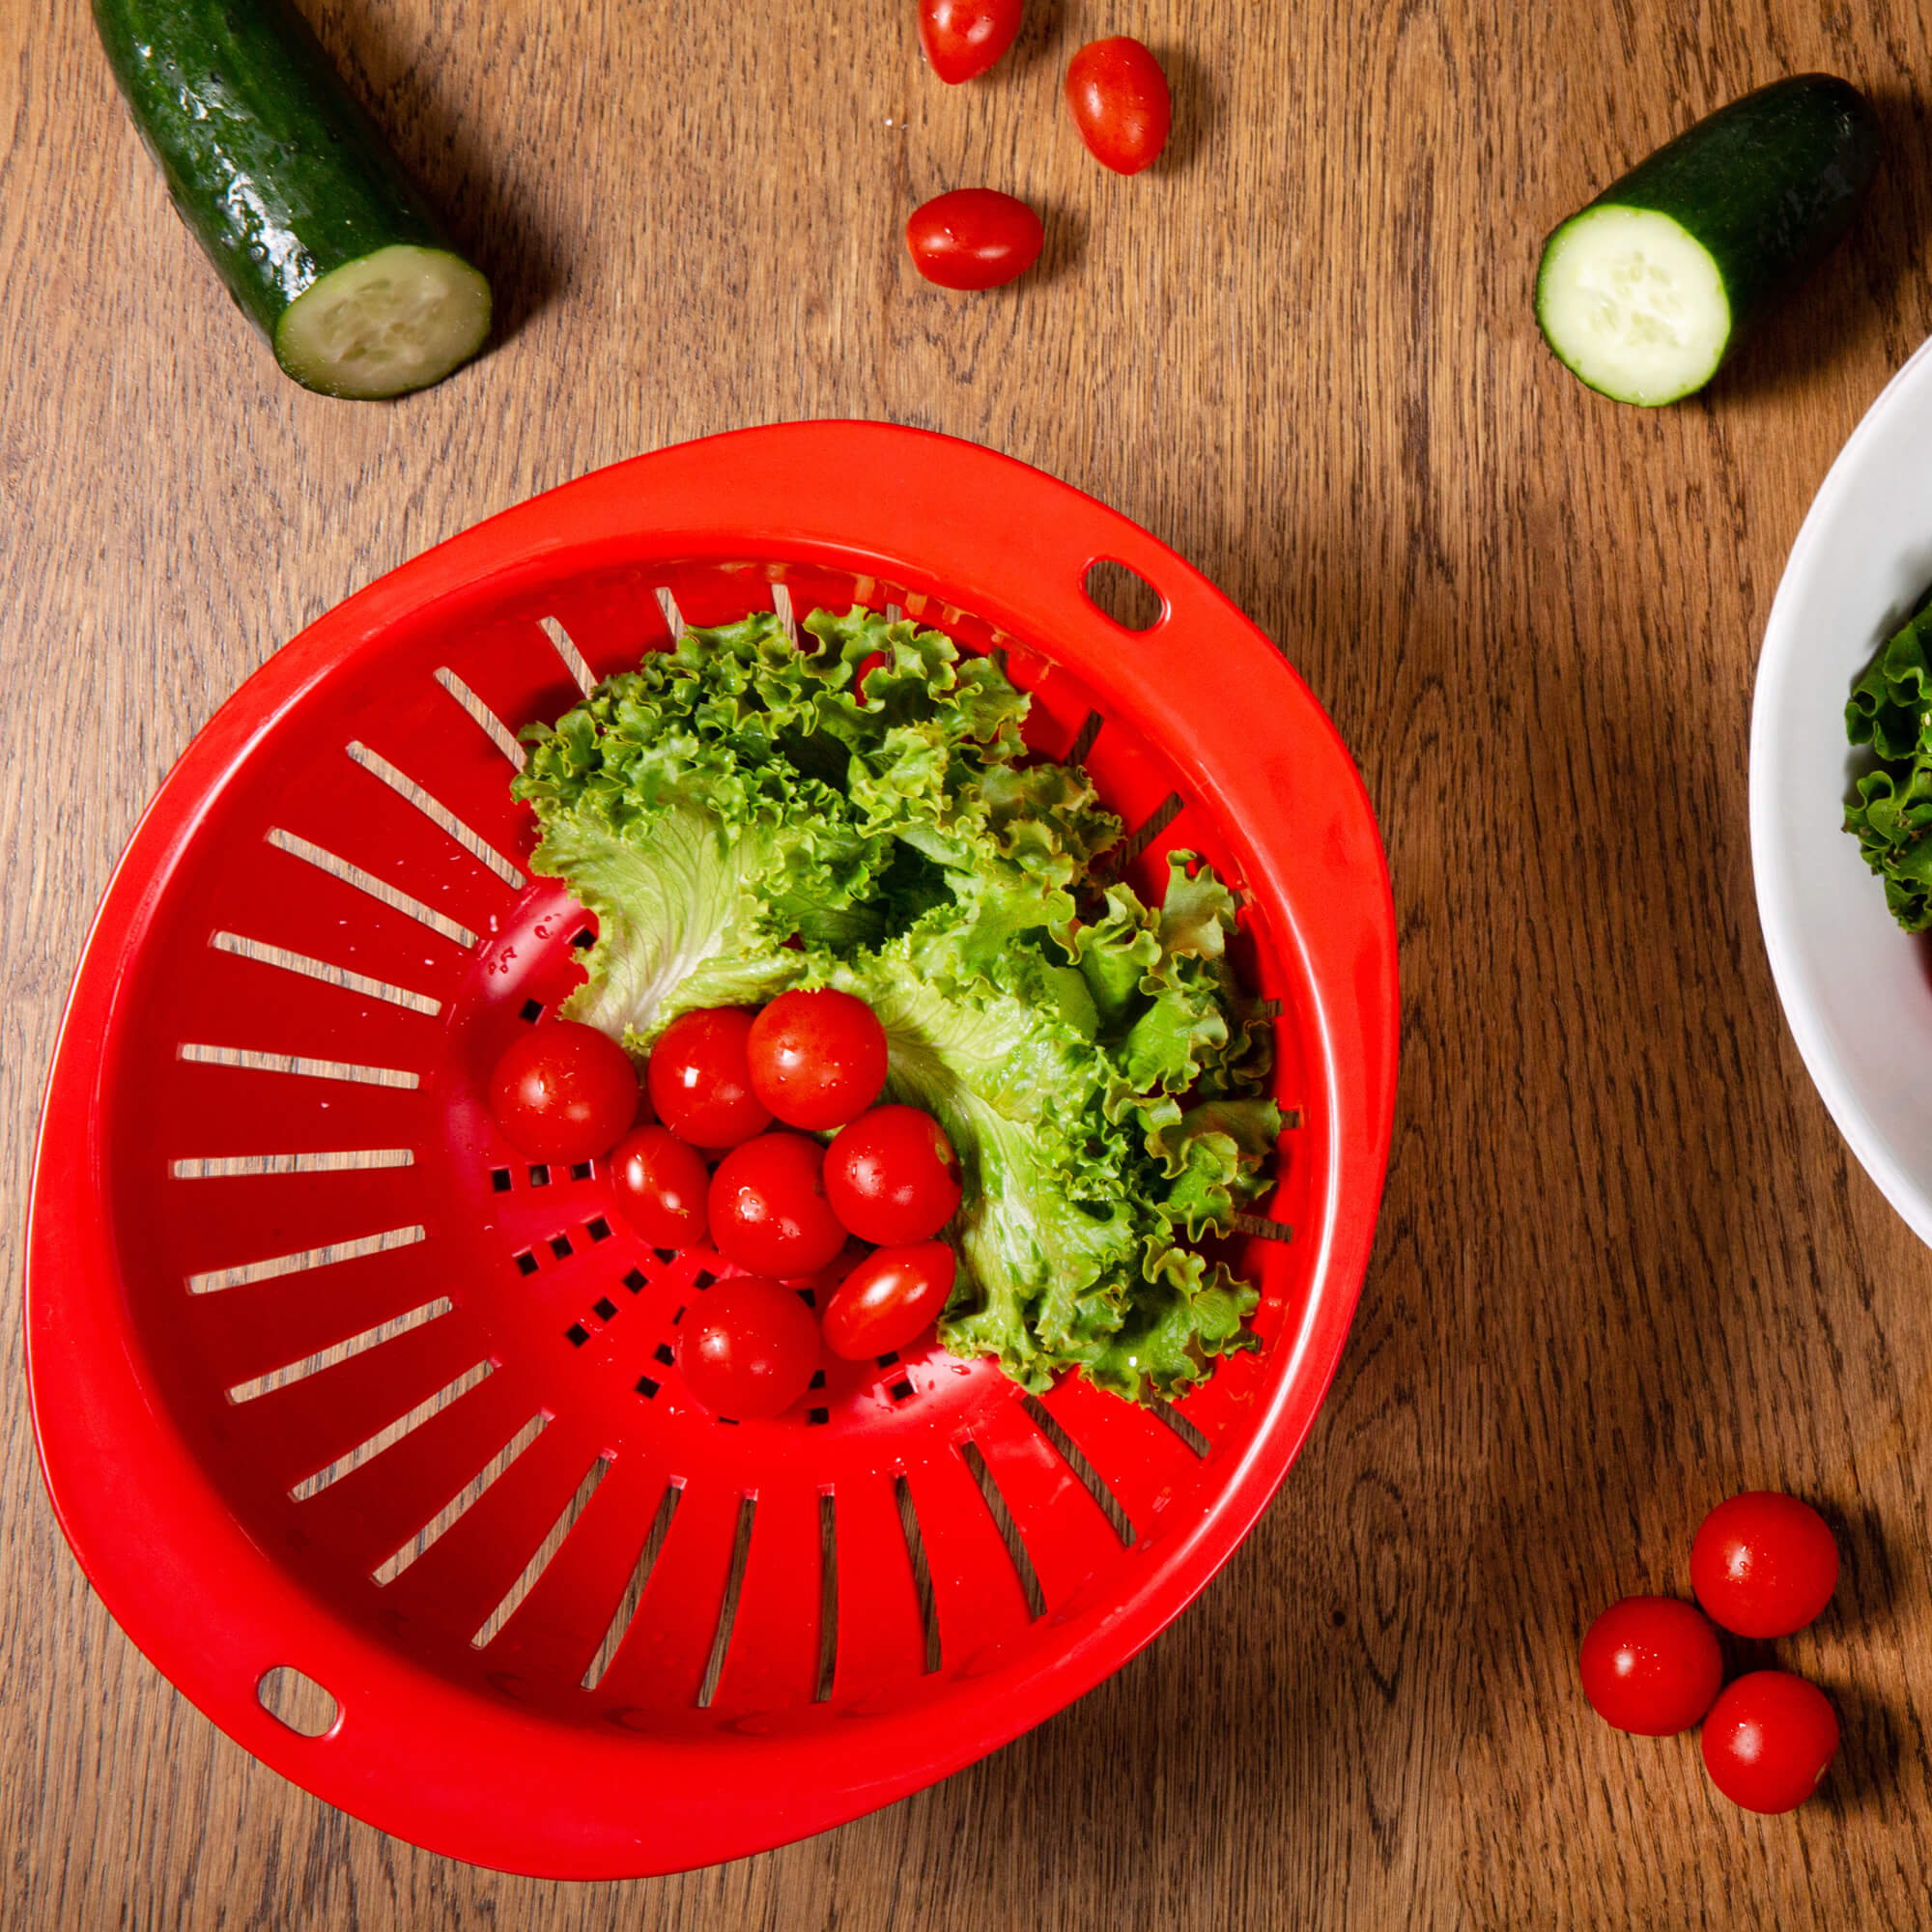 Vegetable and salad strainer